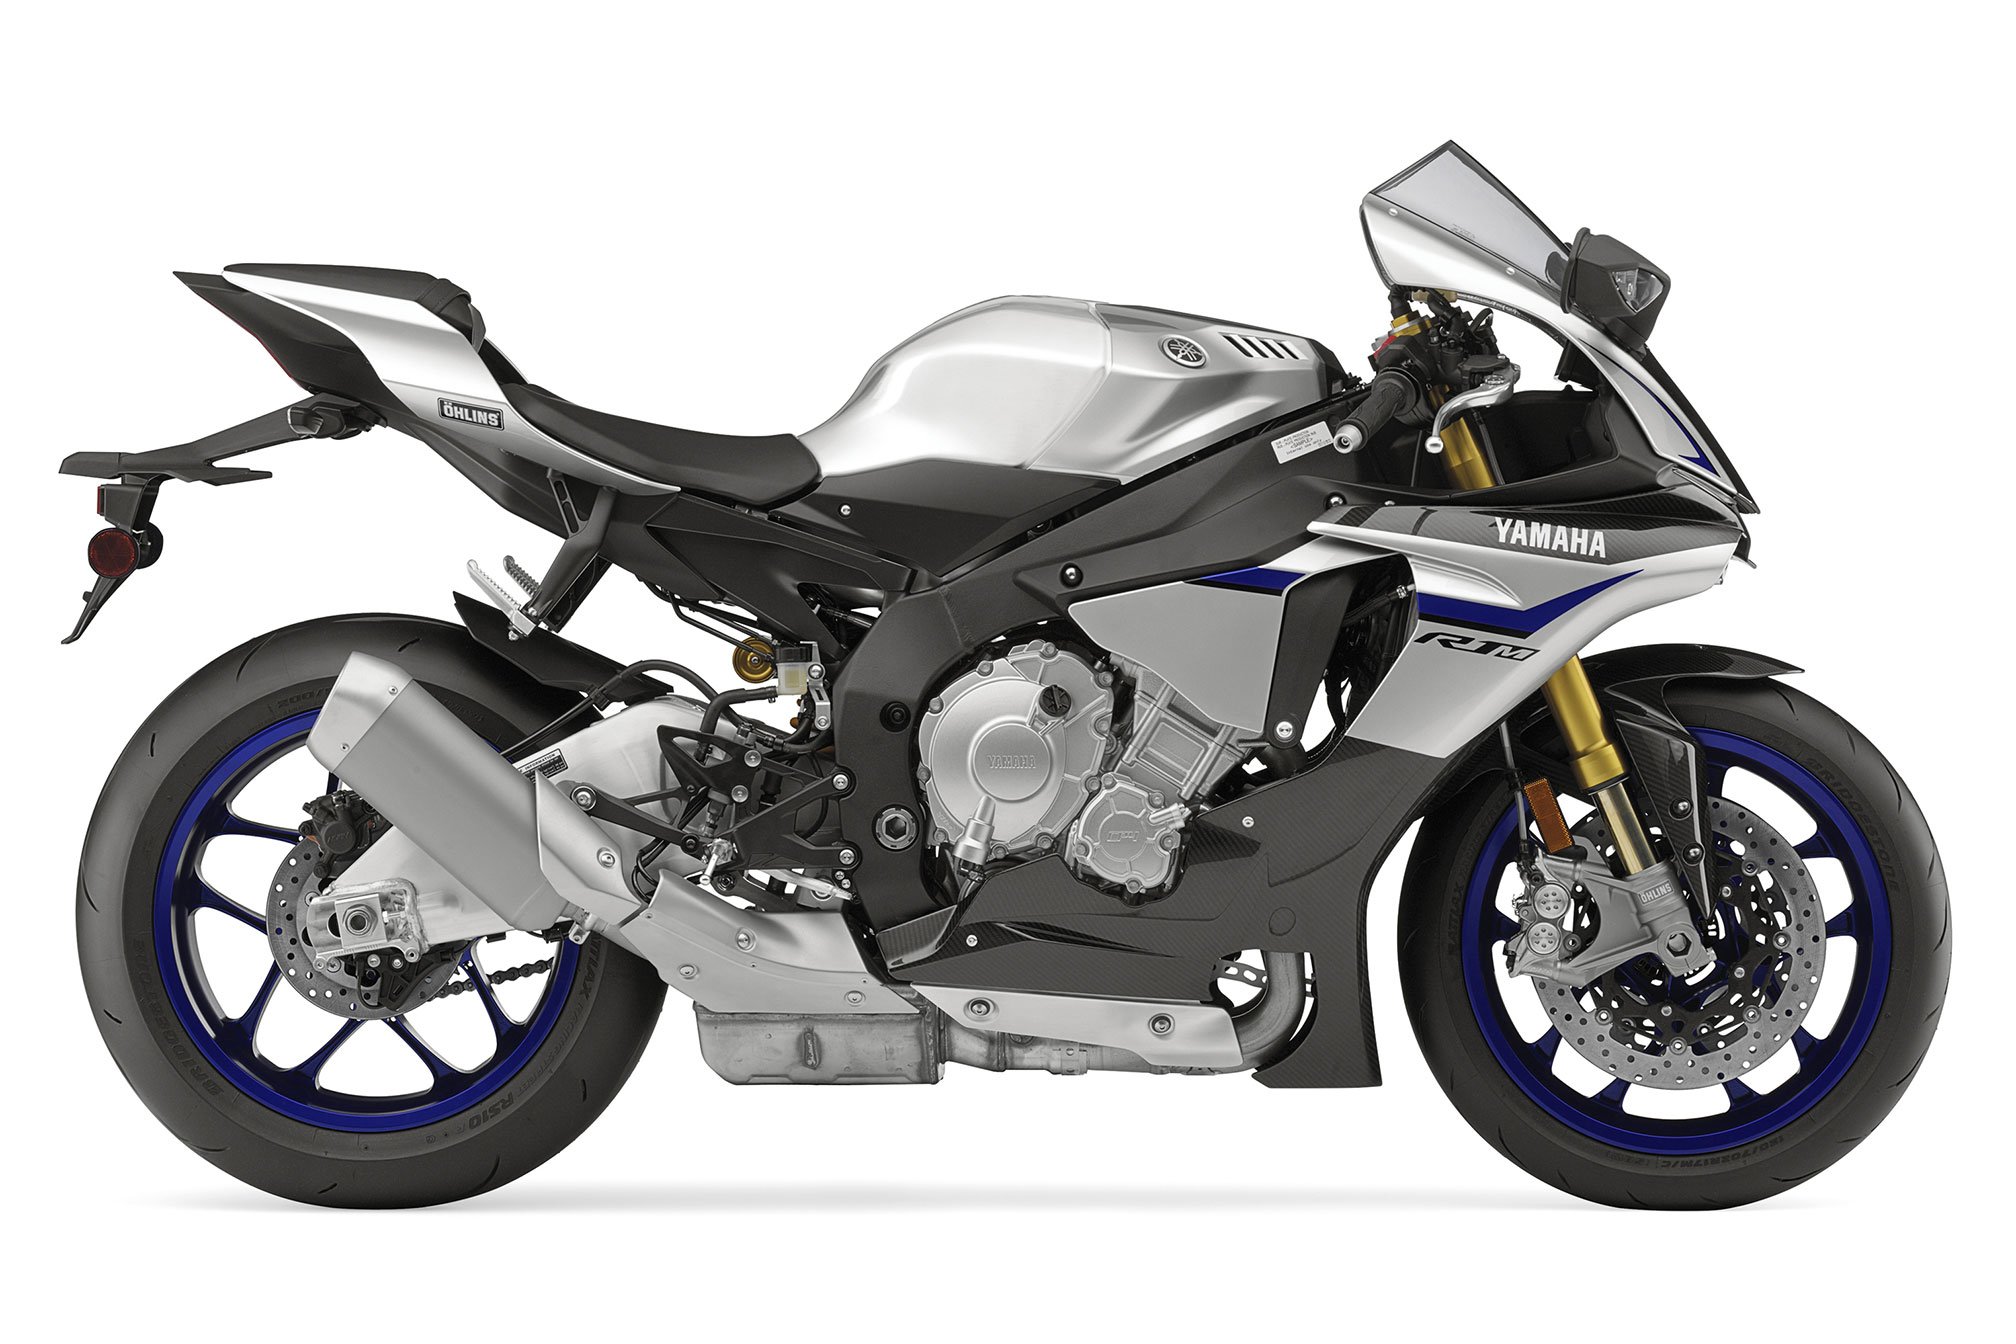 2016, Yamaha, Yzf r1m, Bike, Motorbike, Motorcycle Wallpaper